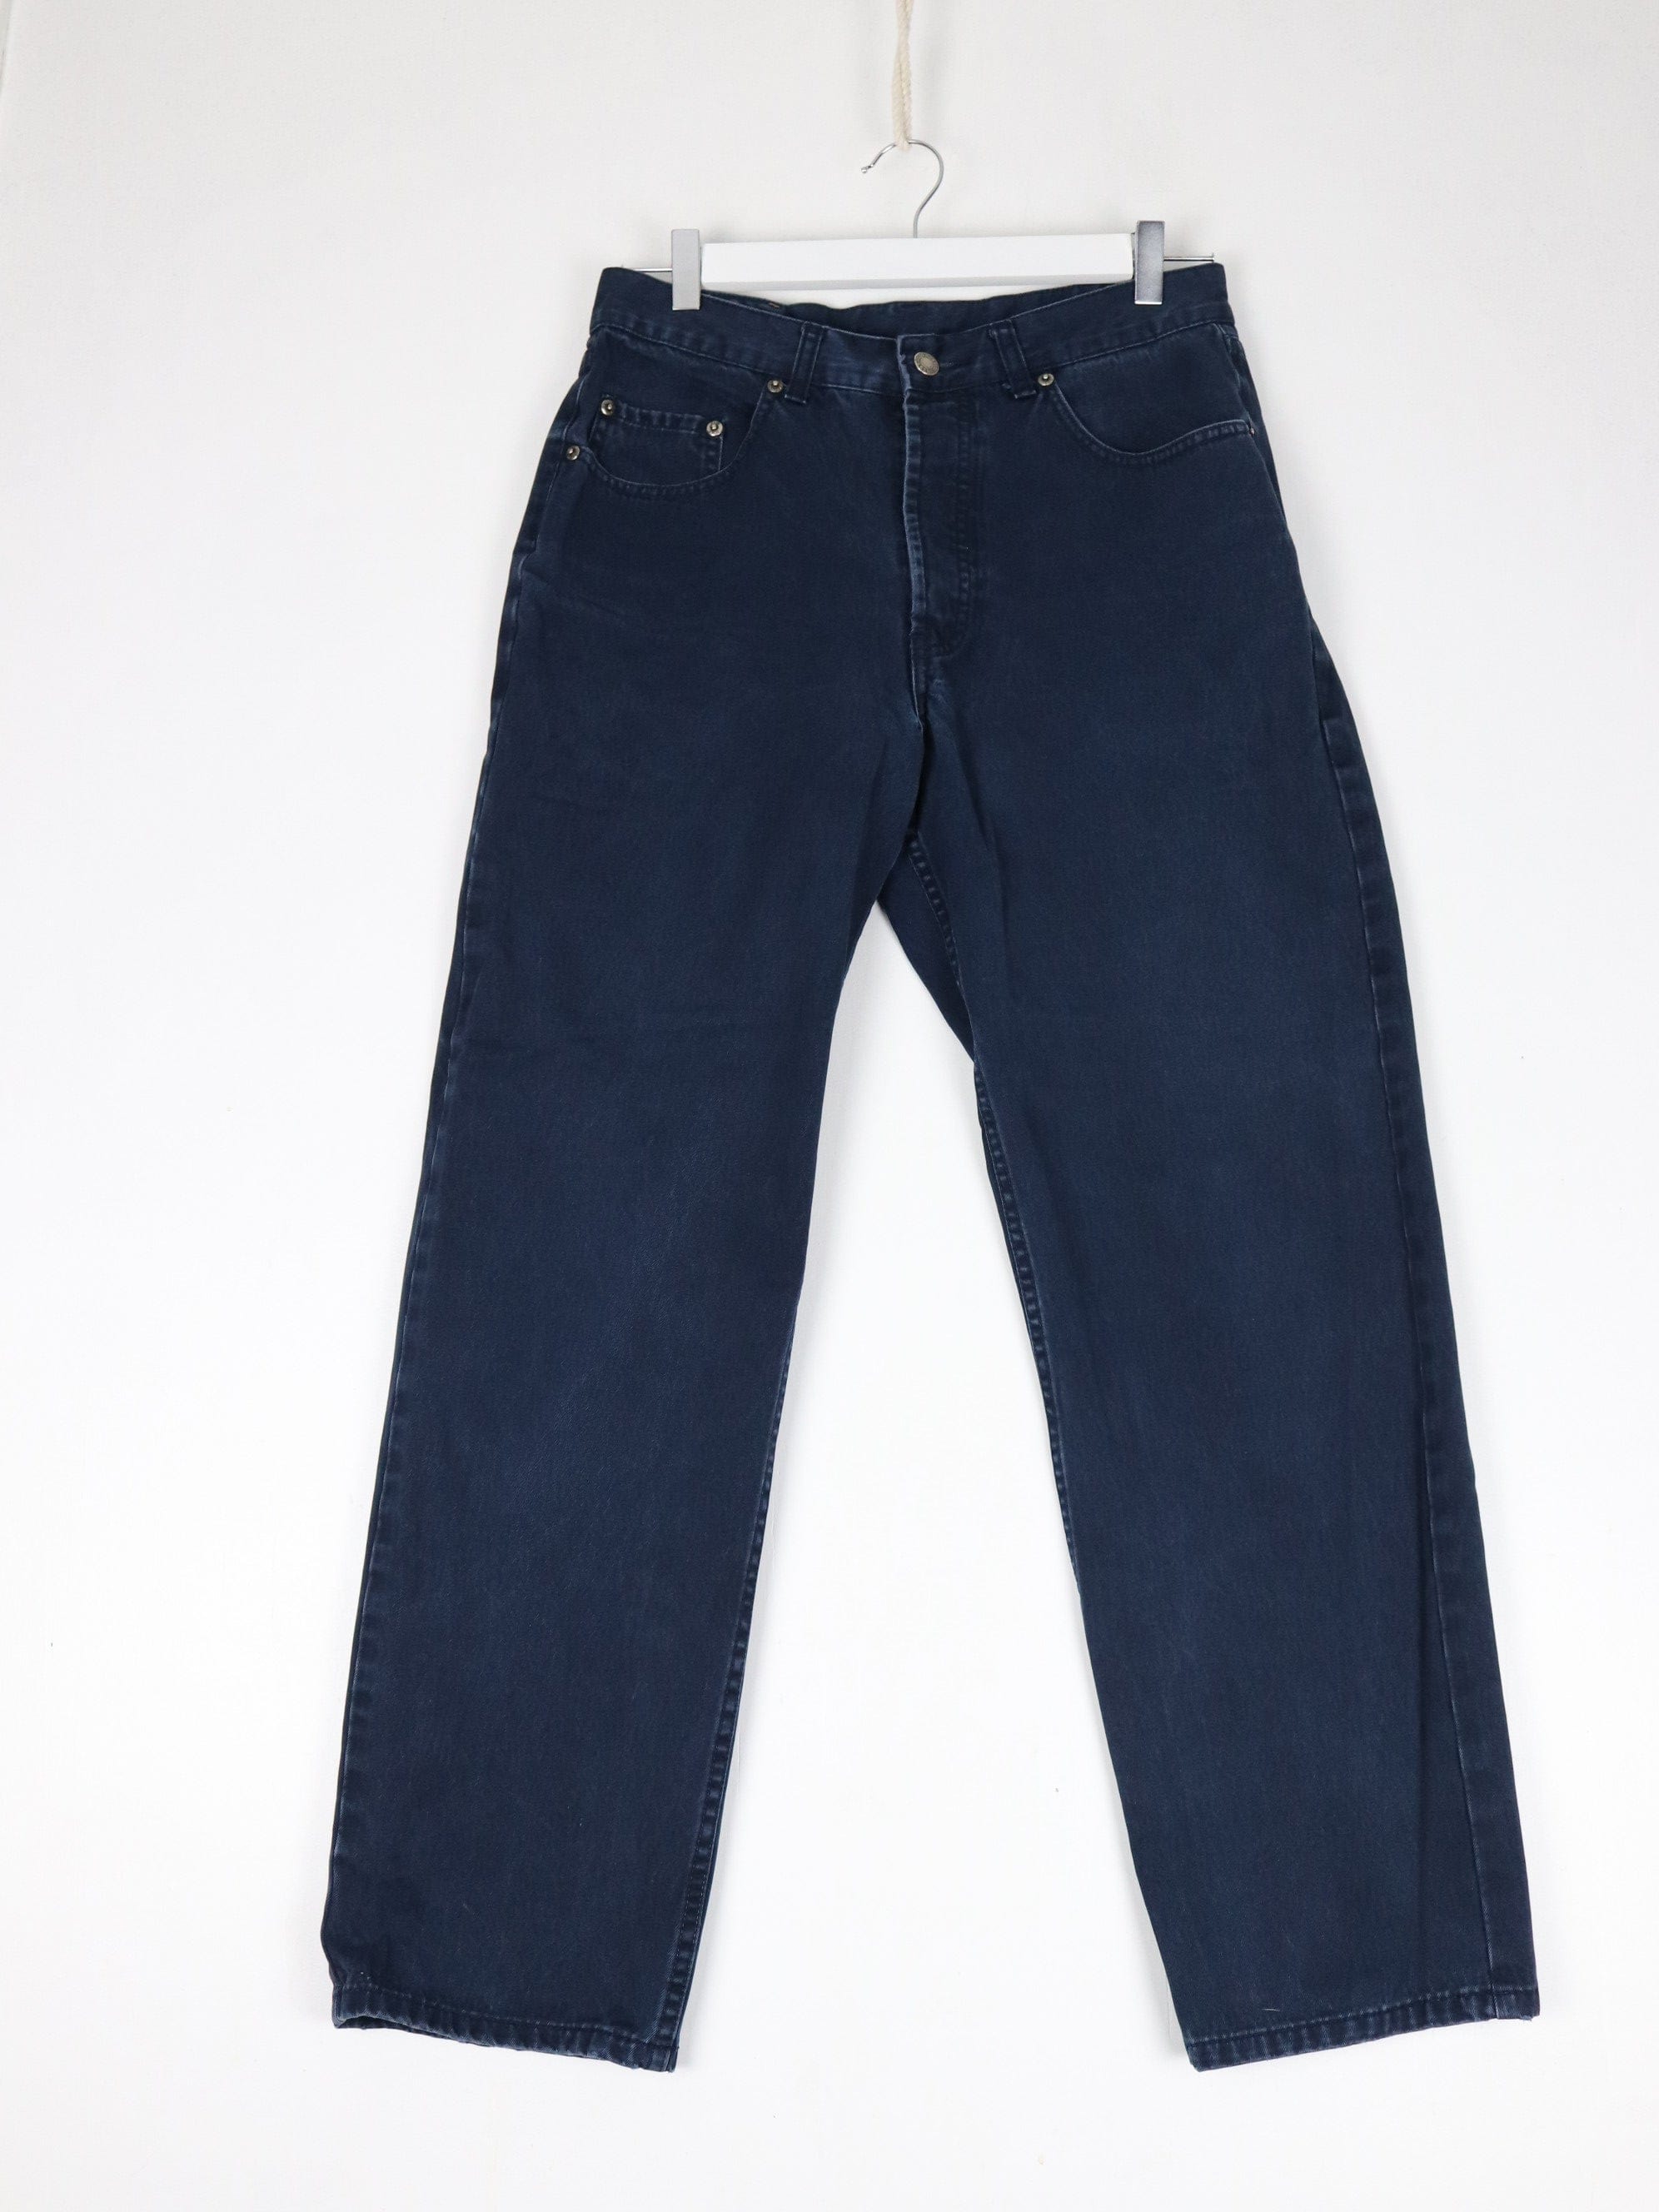 Vintage Gap Pants Mens 32 x 30 Blue Denim Jeans – Proper Vintage